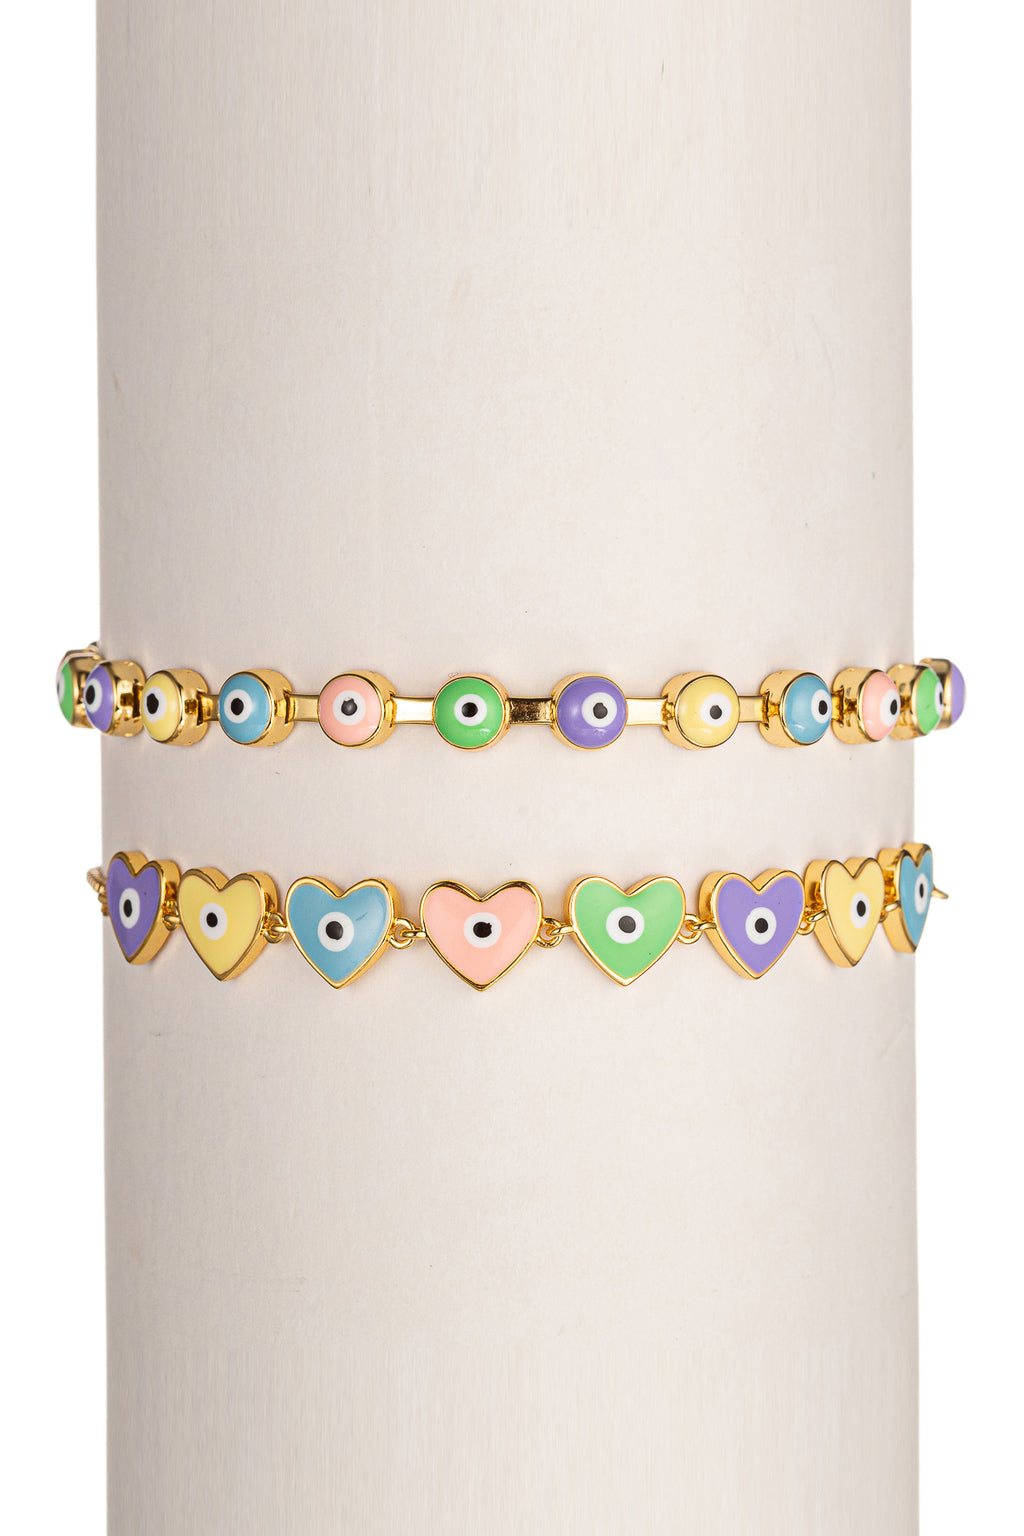 Gold tone brass bracelet set with pastel colored enamel heart & eye pendants.